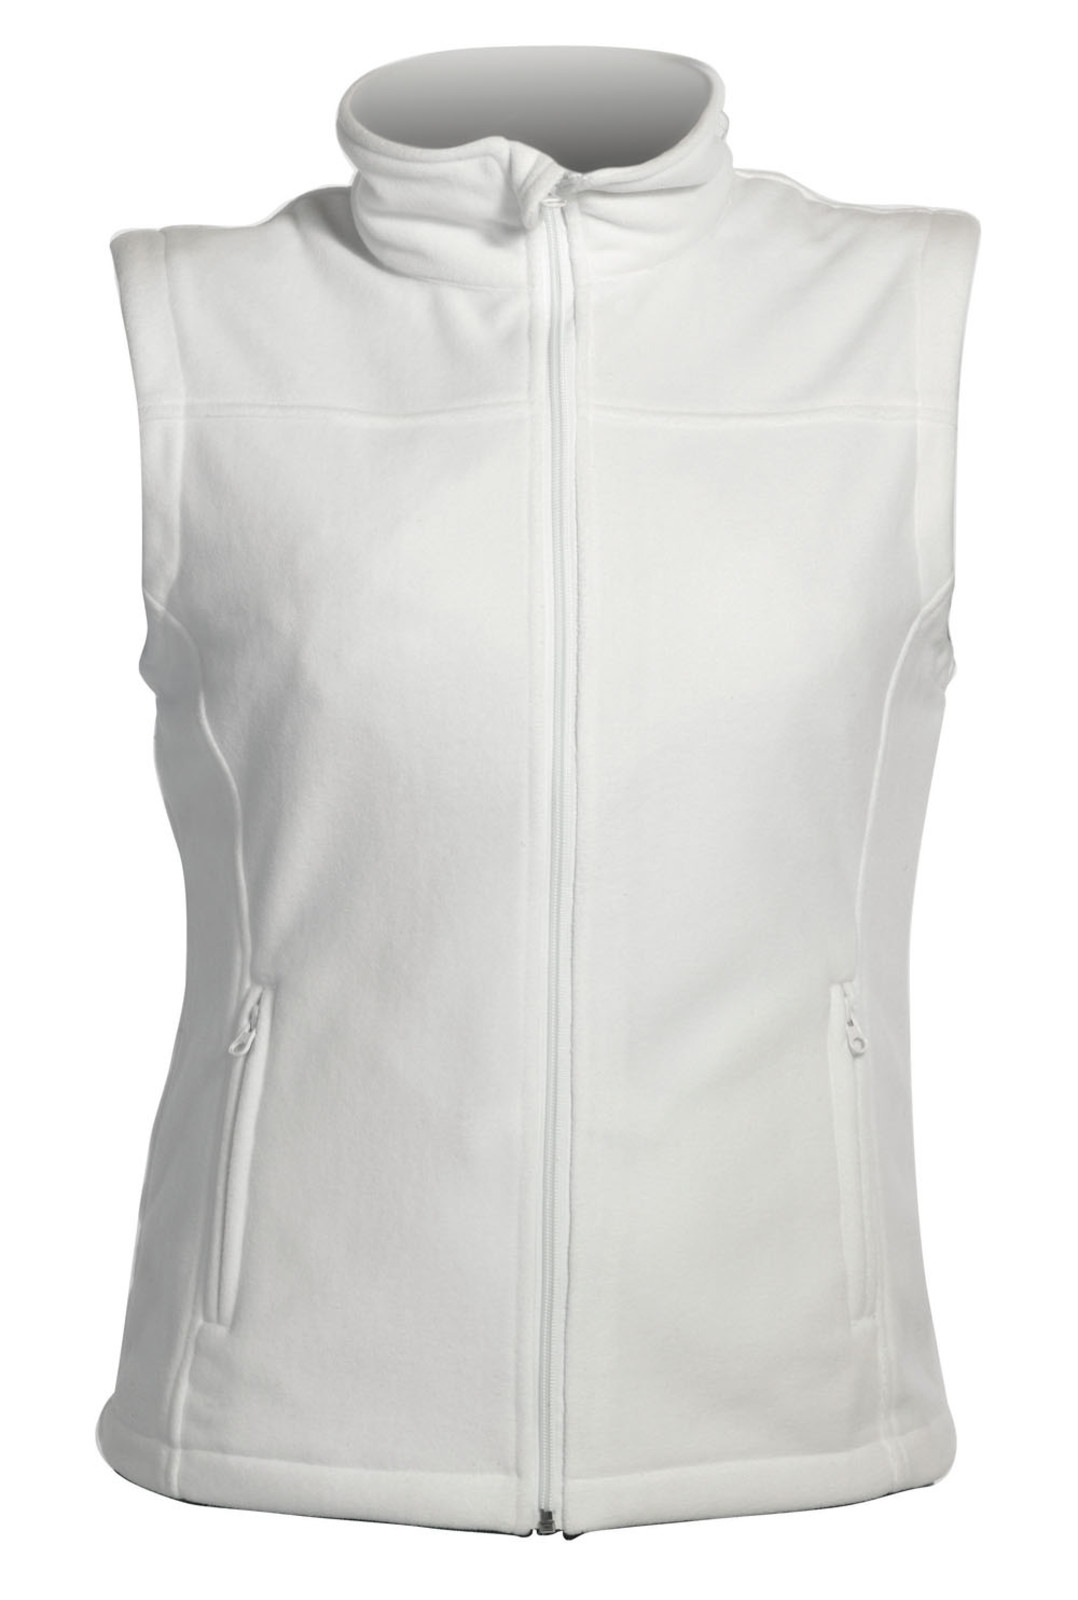 Fleece vesta Vorma Lady dámska - veľkosť: XXL, farba: biela